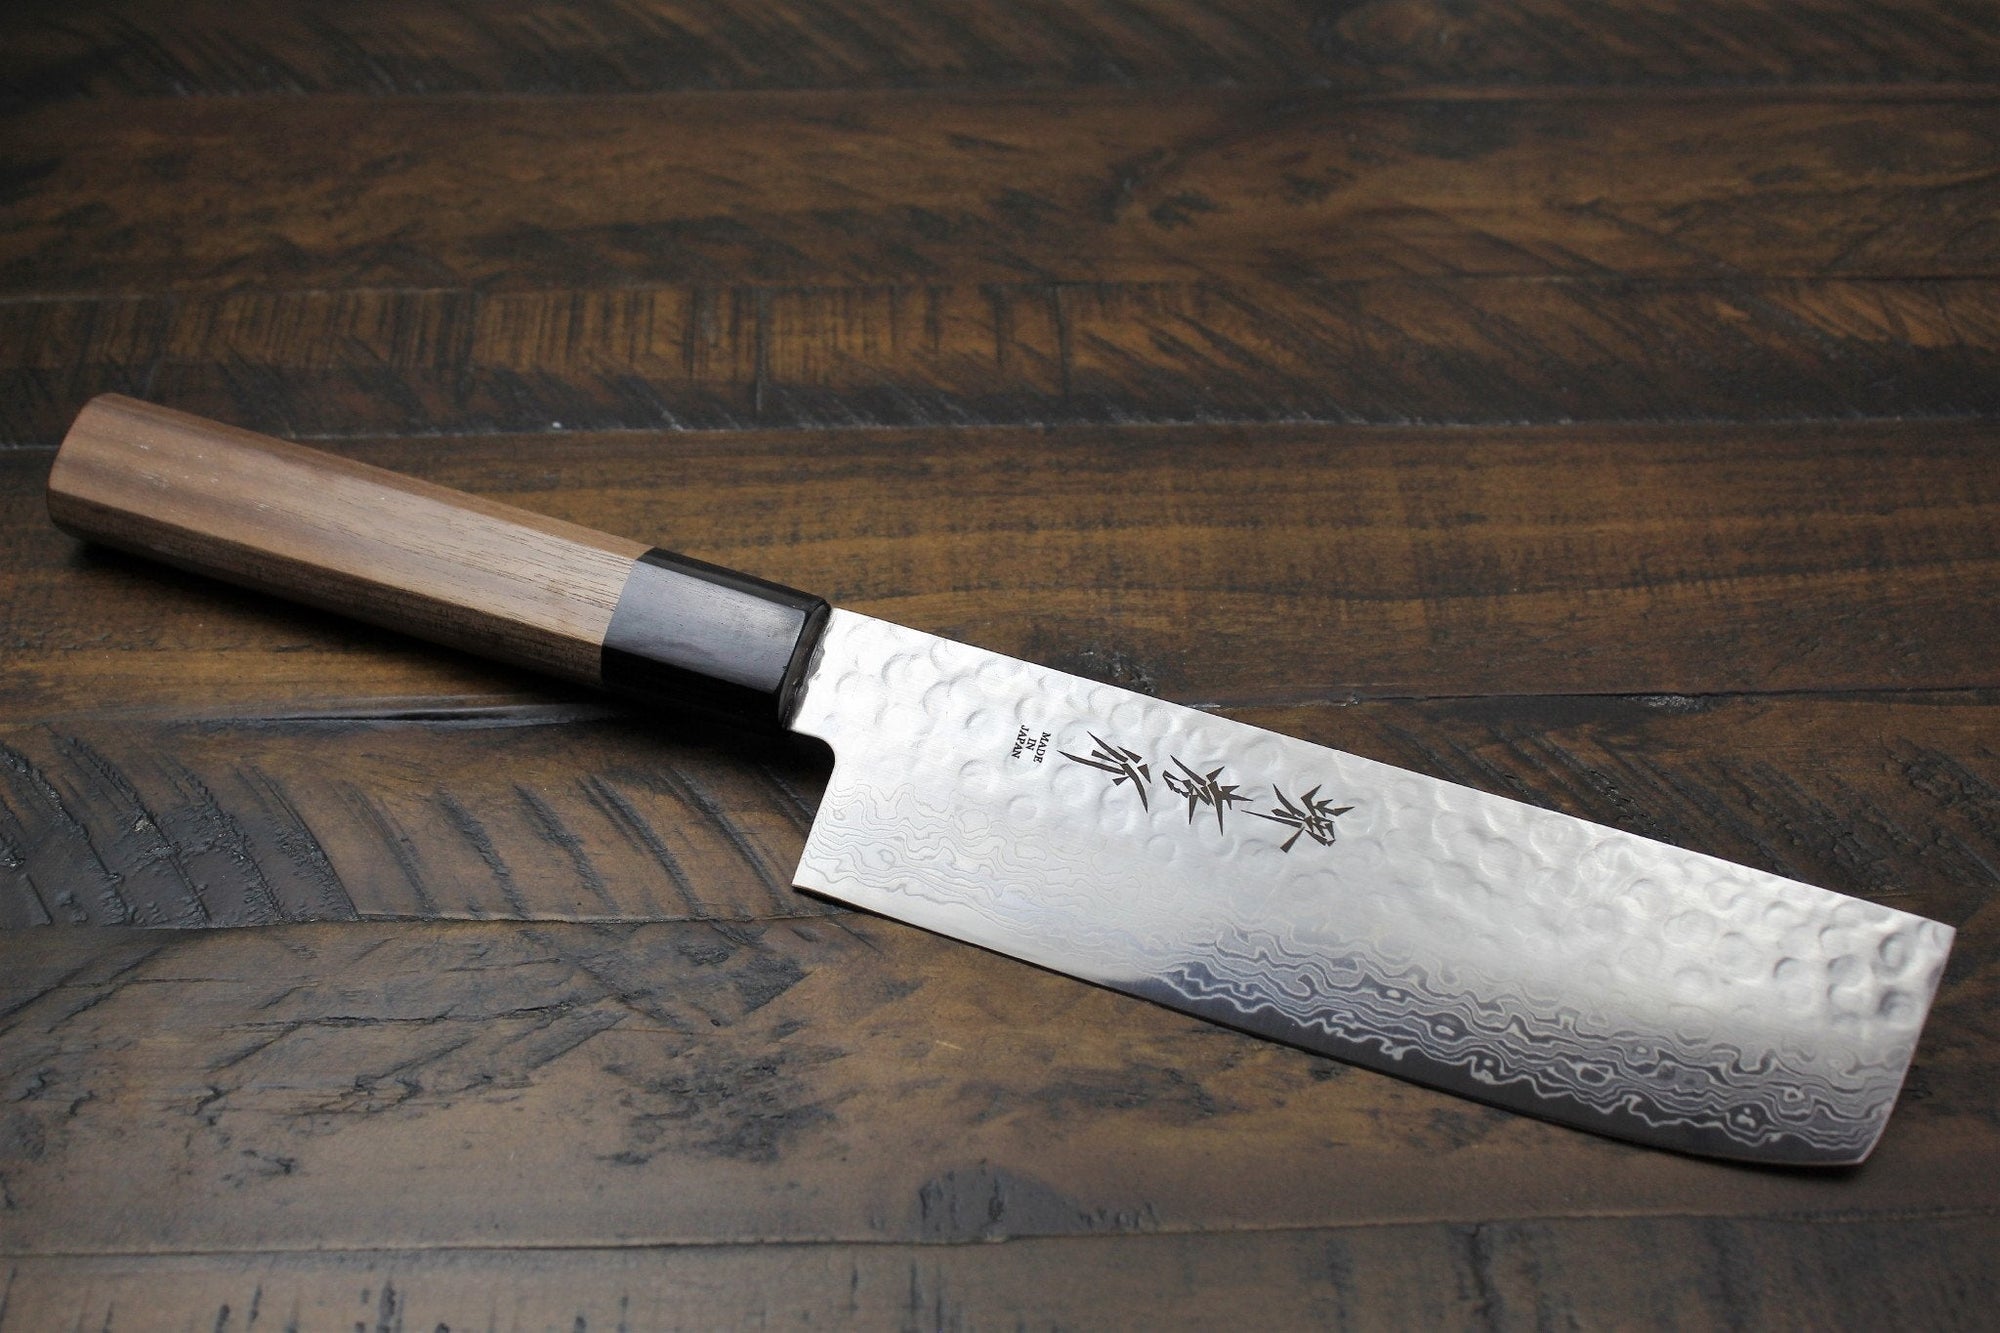 Walnut-Handled Japanese-Style Cooking Knives Set